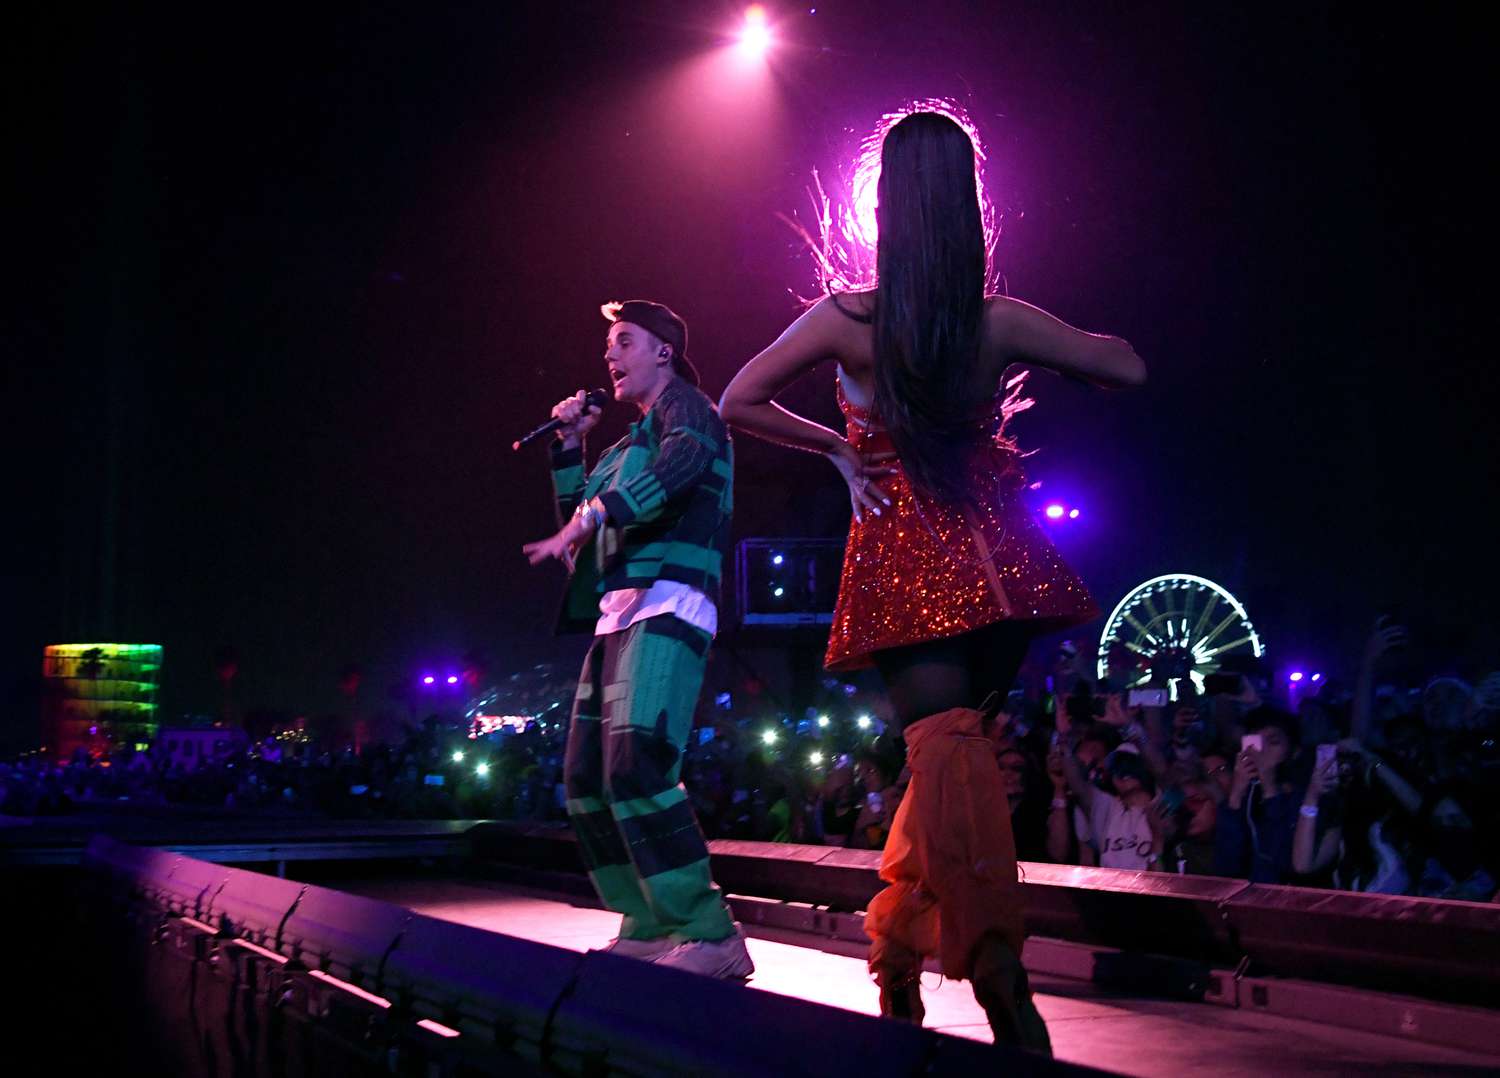 Bieber performs with Ariana Grande at Coachella